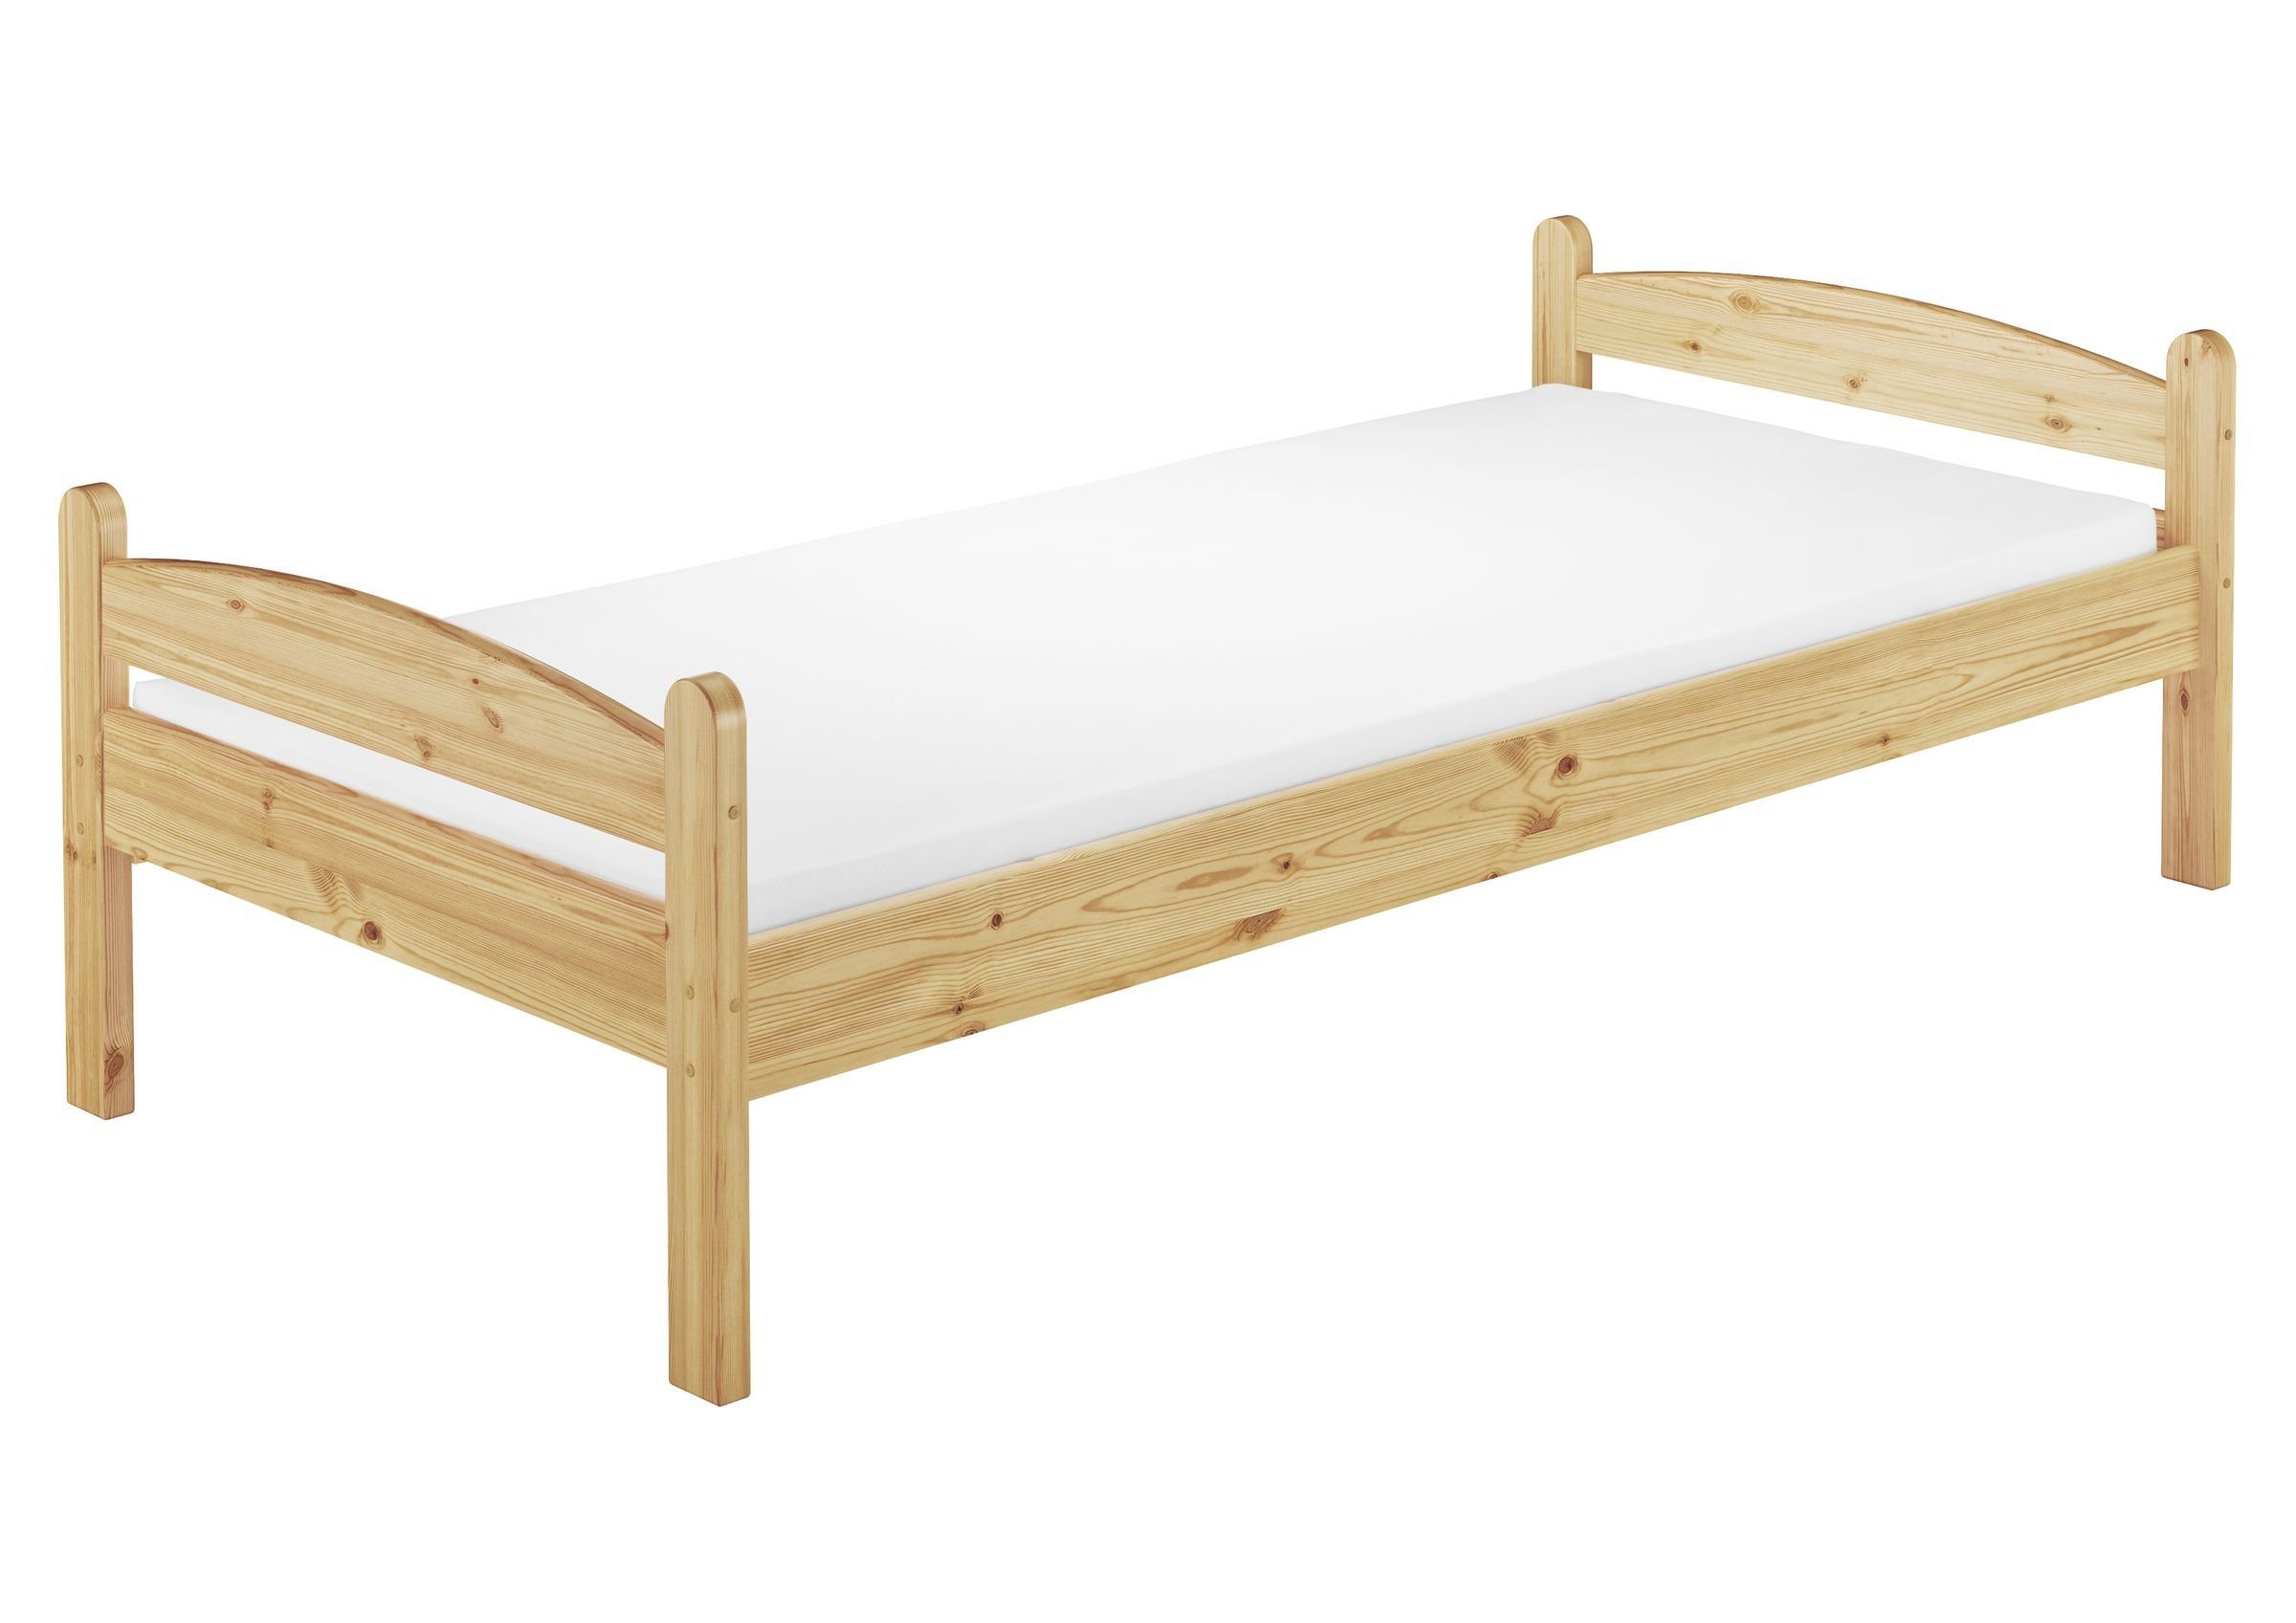 ERST-HOLZ Bett Bettenset mit Holzgestell, Rost und Matratze 100x200, Kieferfarblos lackiert